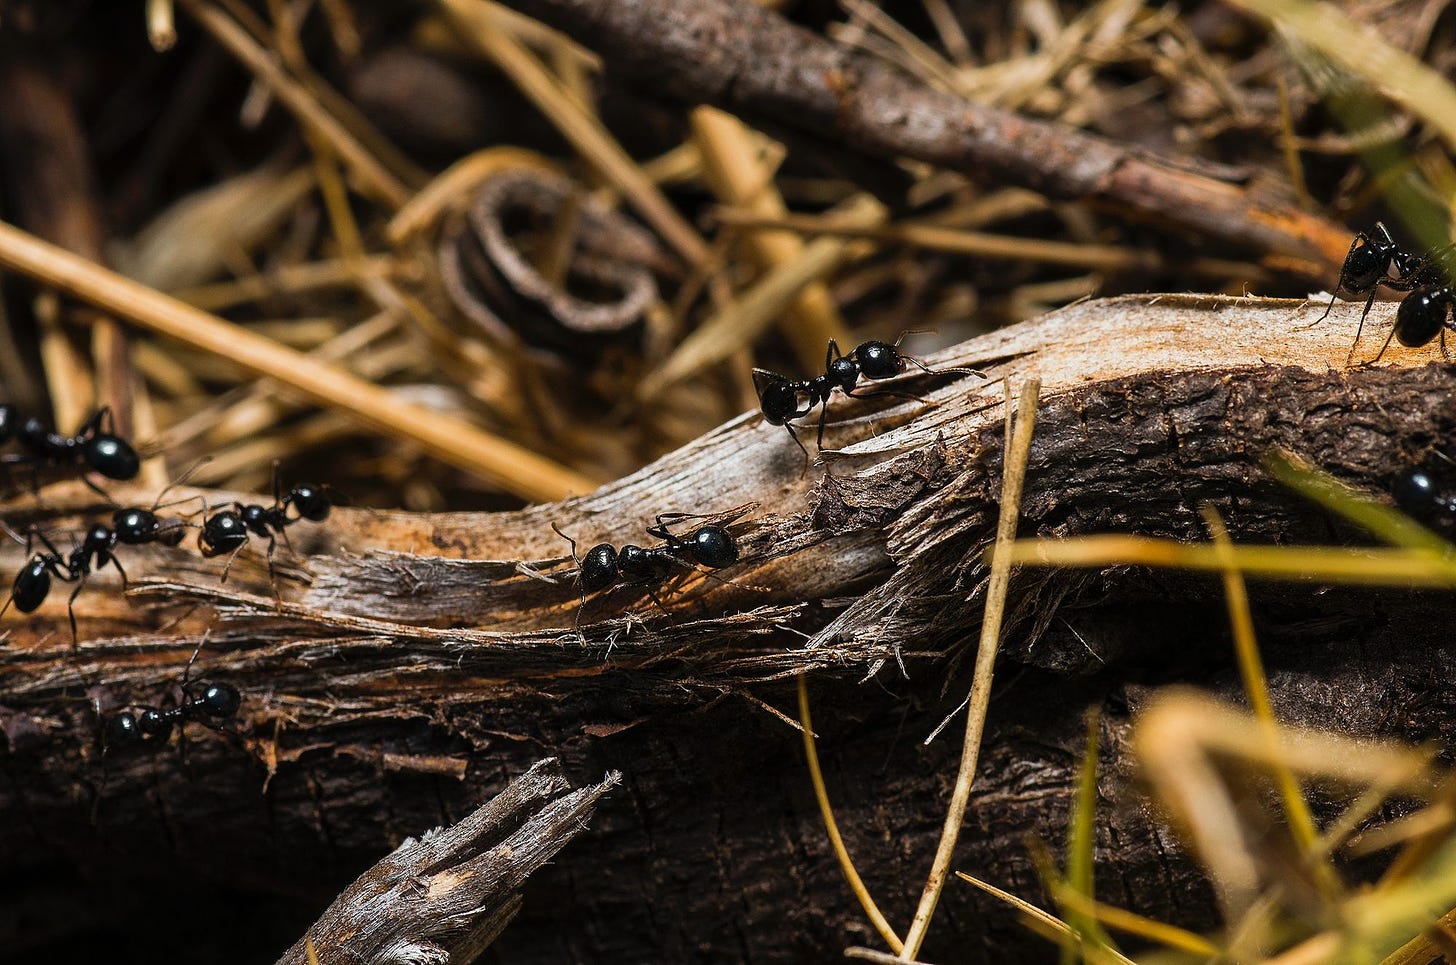 Photo of ants on a log via Pexels